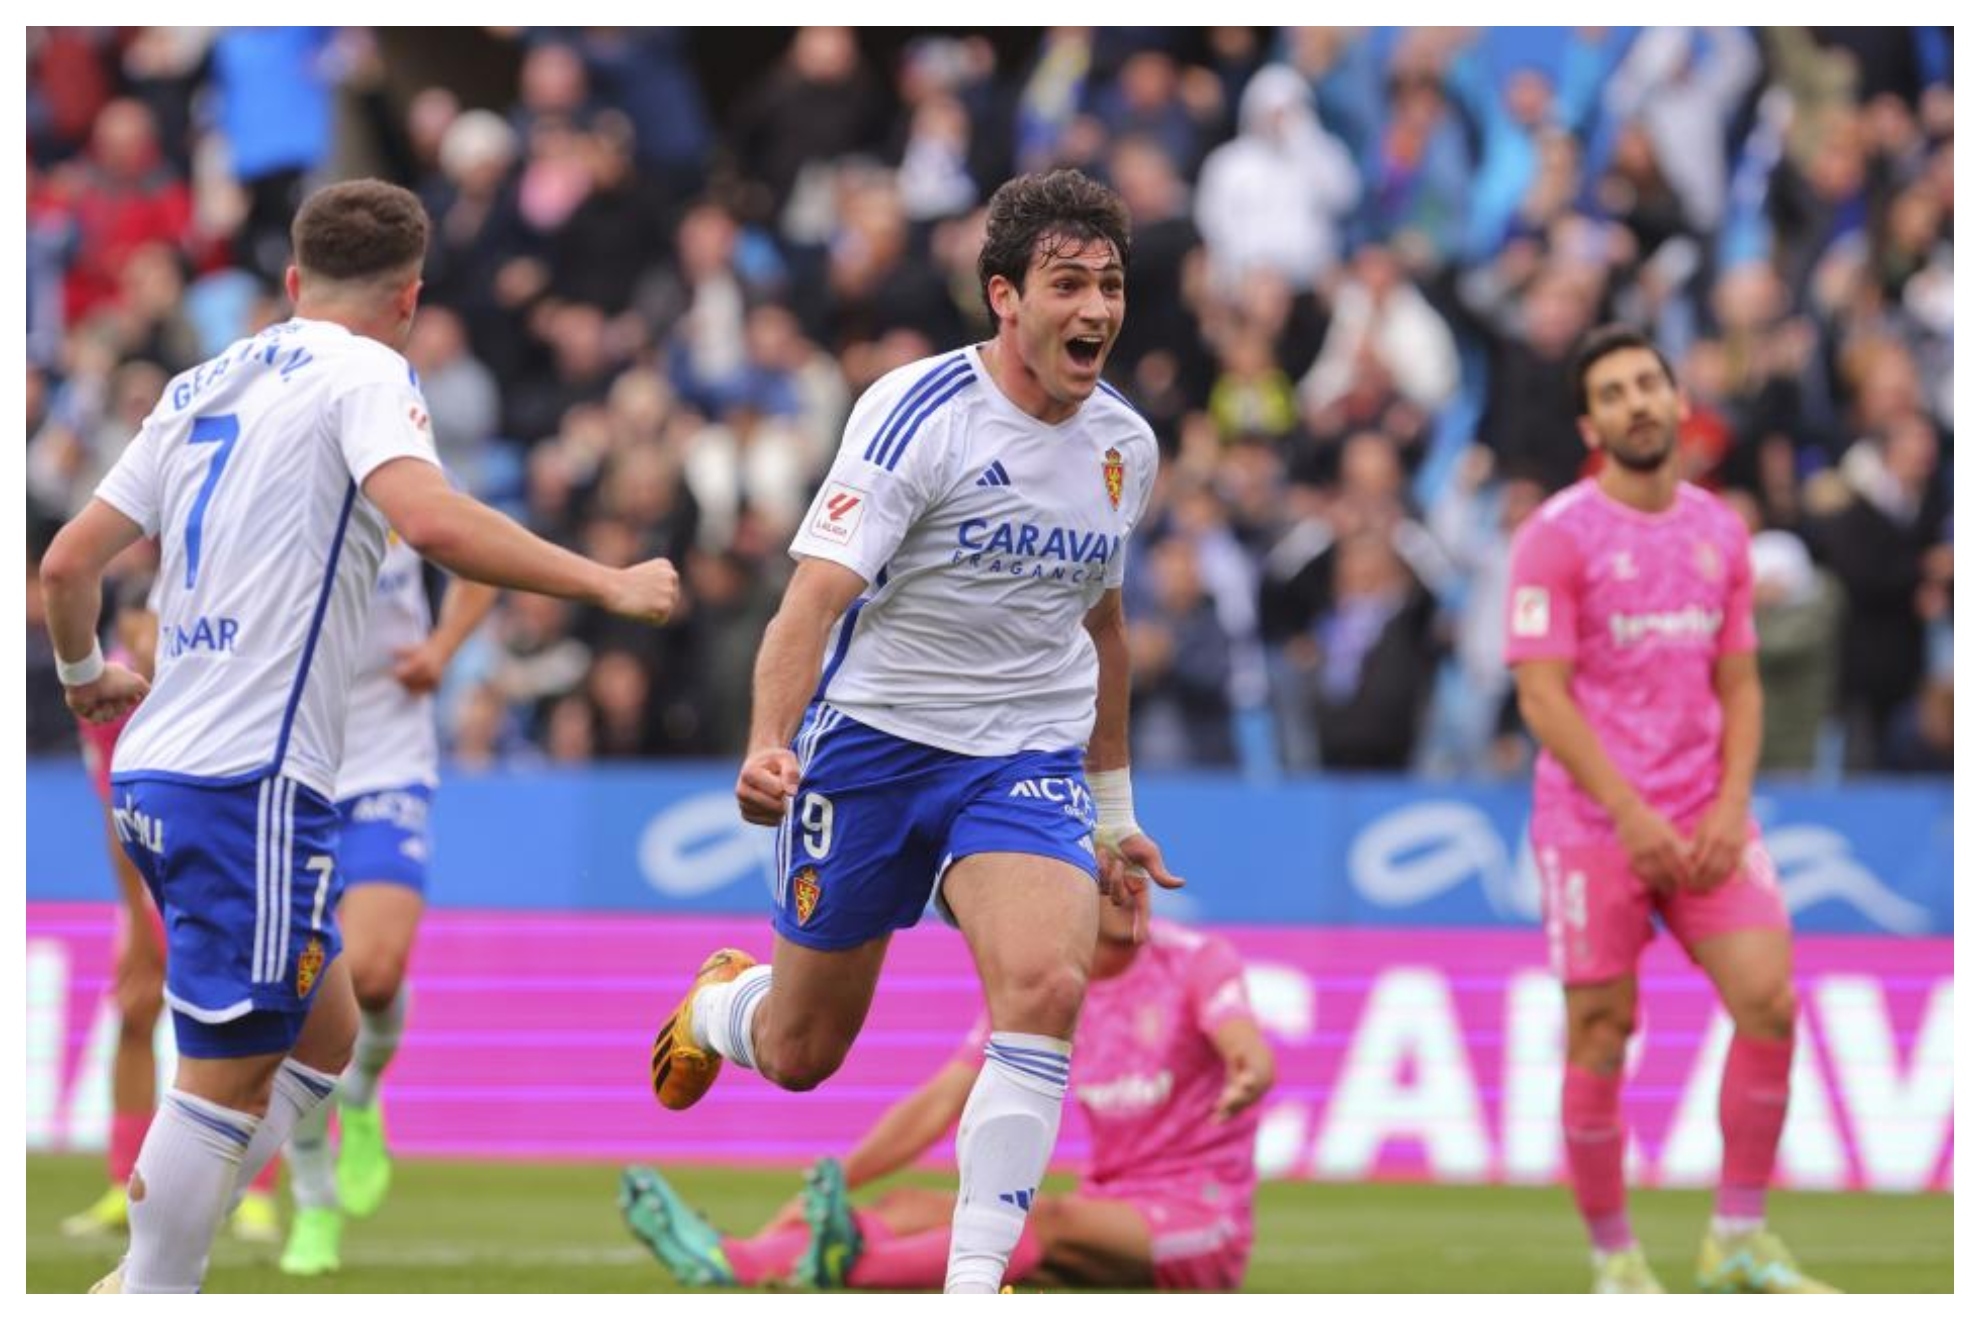 Ivn Azn celebra con alegra el segundo gol del Zaragoza